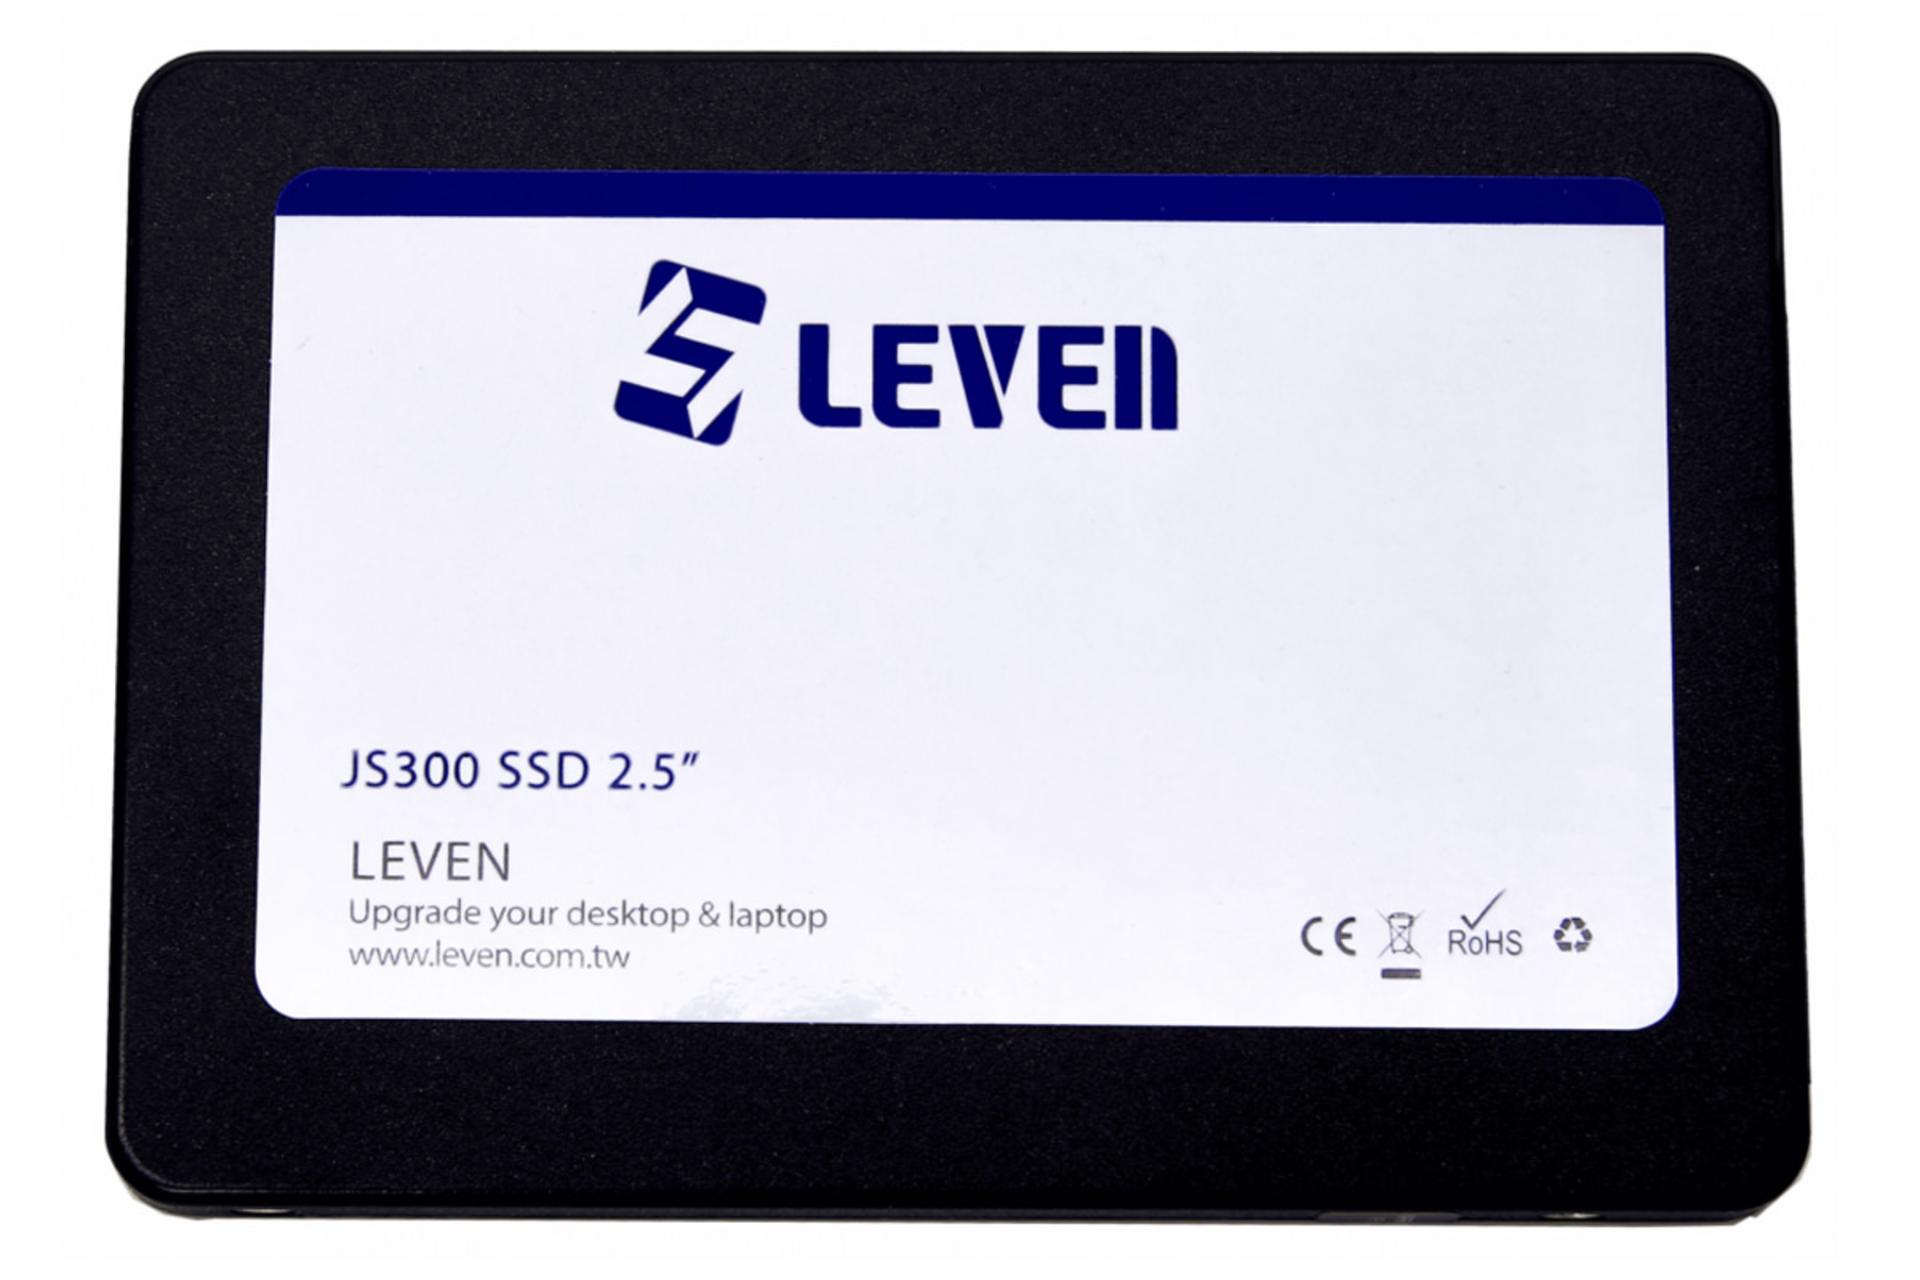 نمای روبرو SSD لون JS300 SATA 2.5 Inch